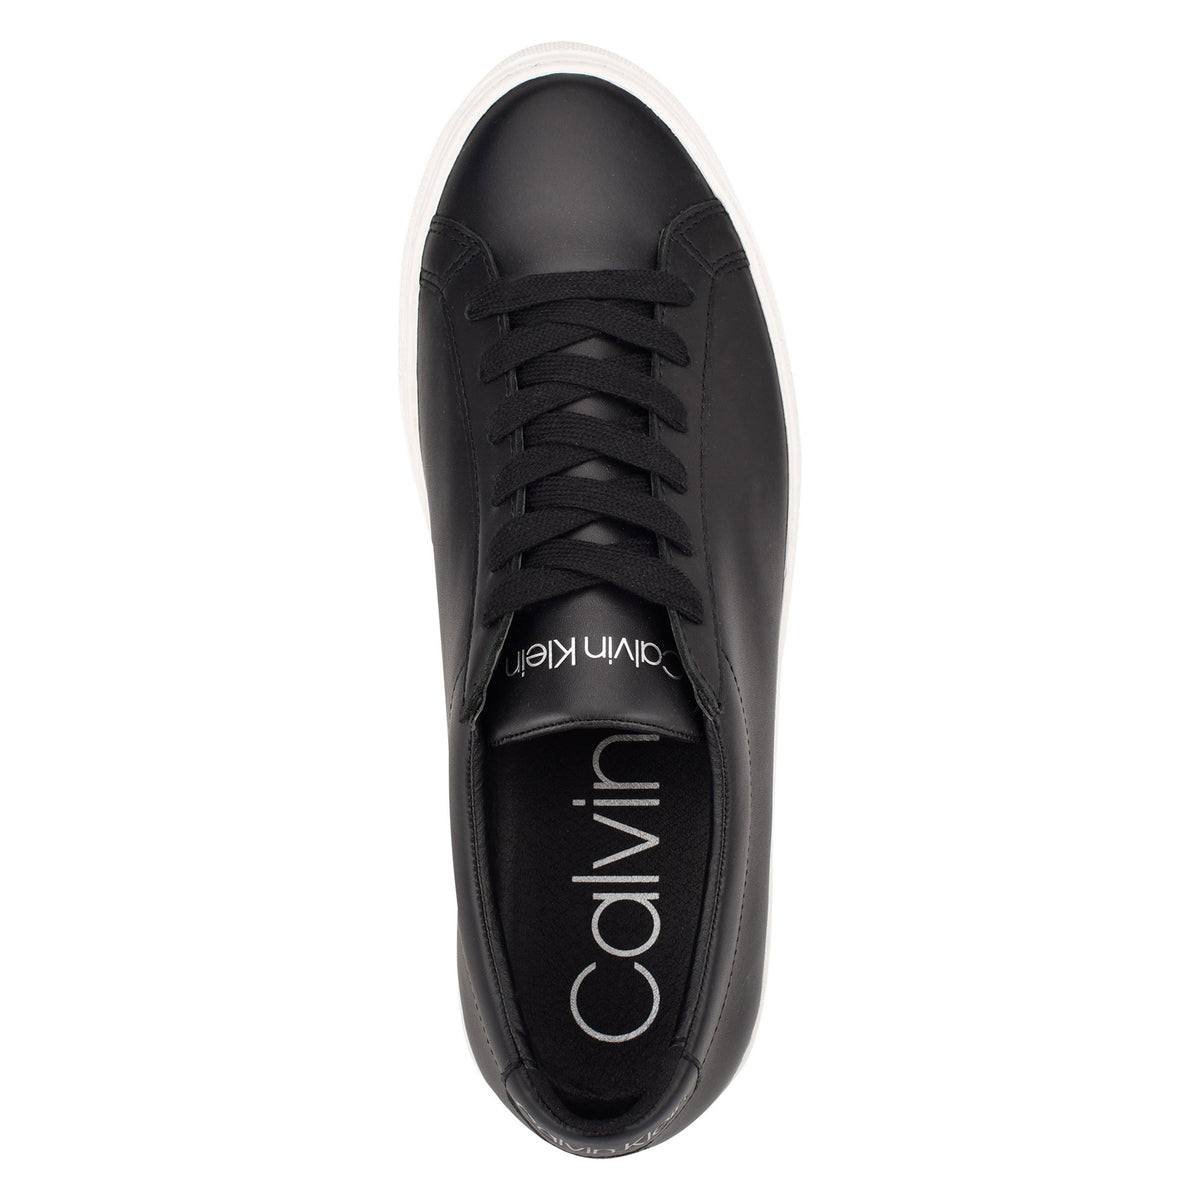 Calvin Klein Men Adrien Black Shoes